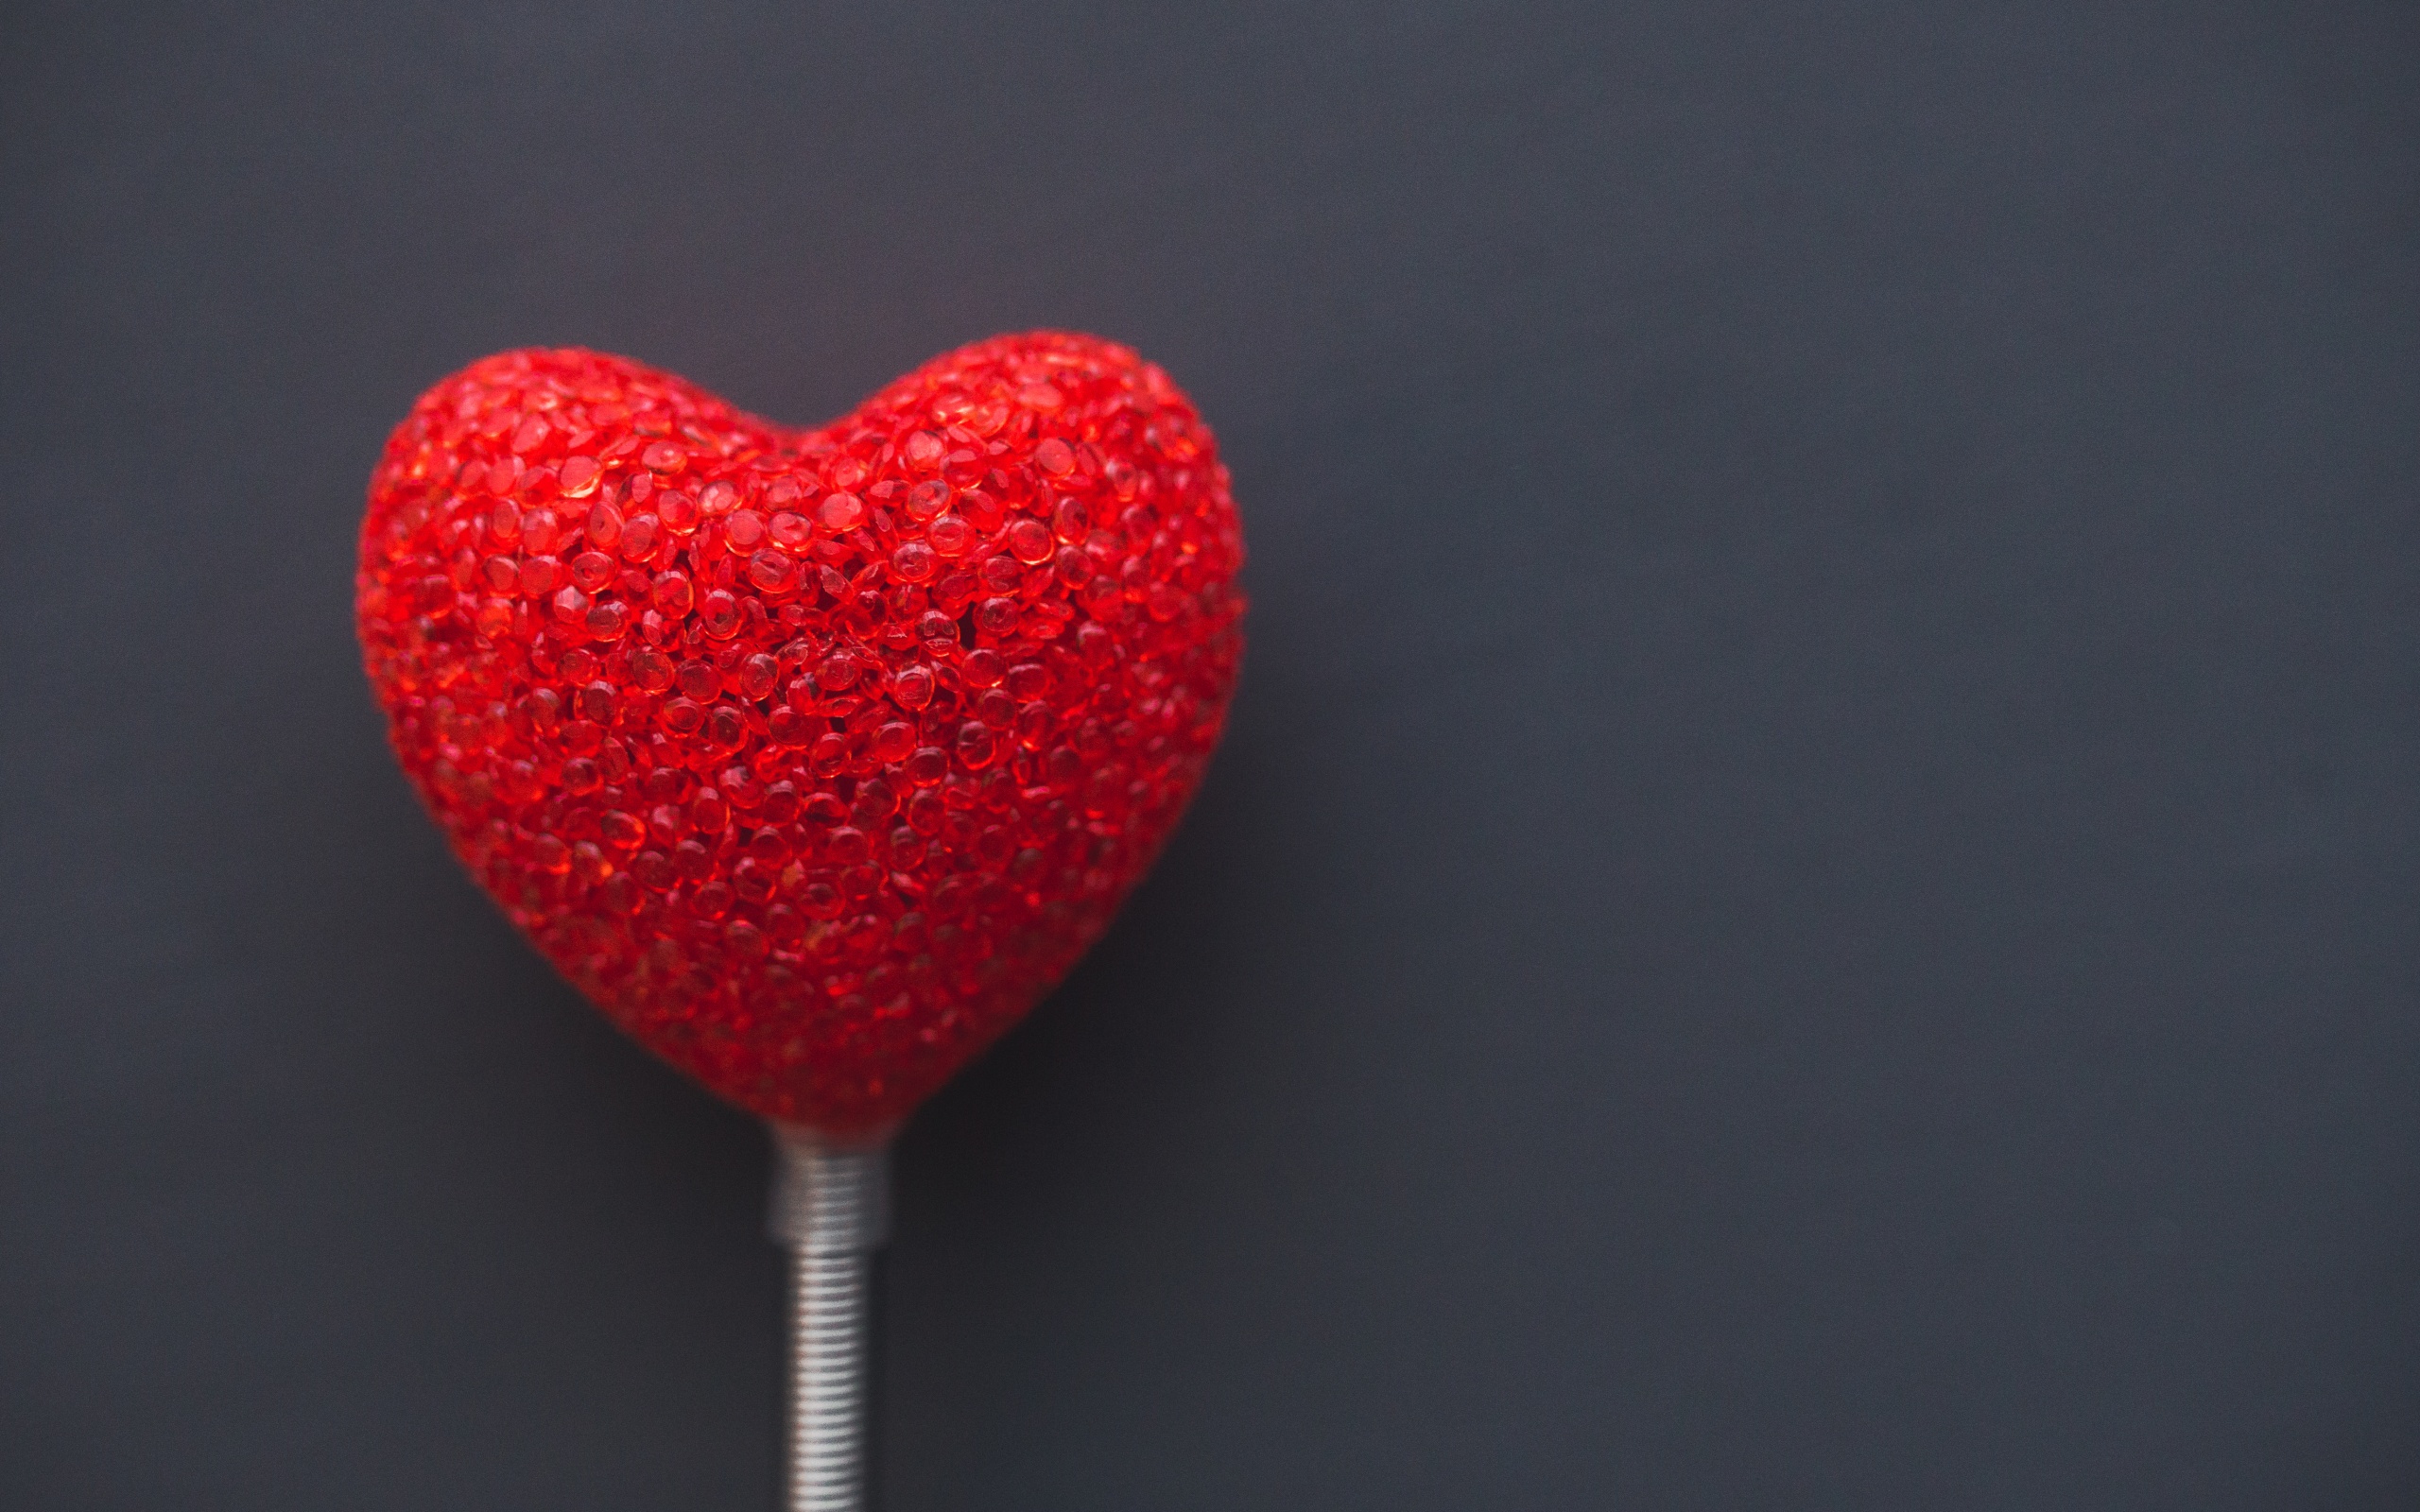 минимализм, любовь, красное сердце на палочке, серый фон, Minimalism, love, red heart on a stick, gray background